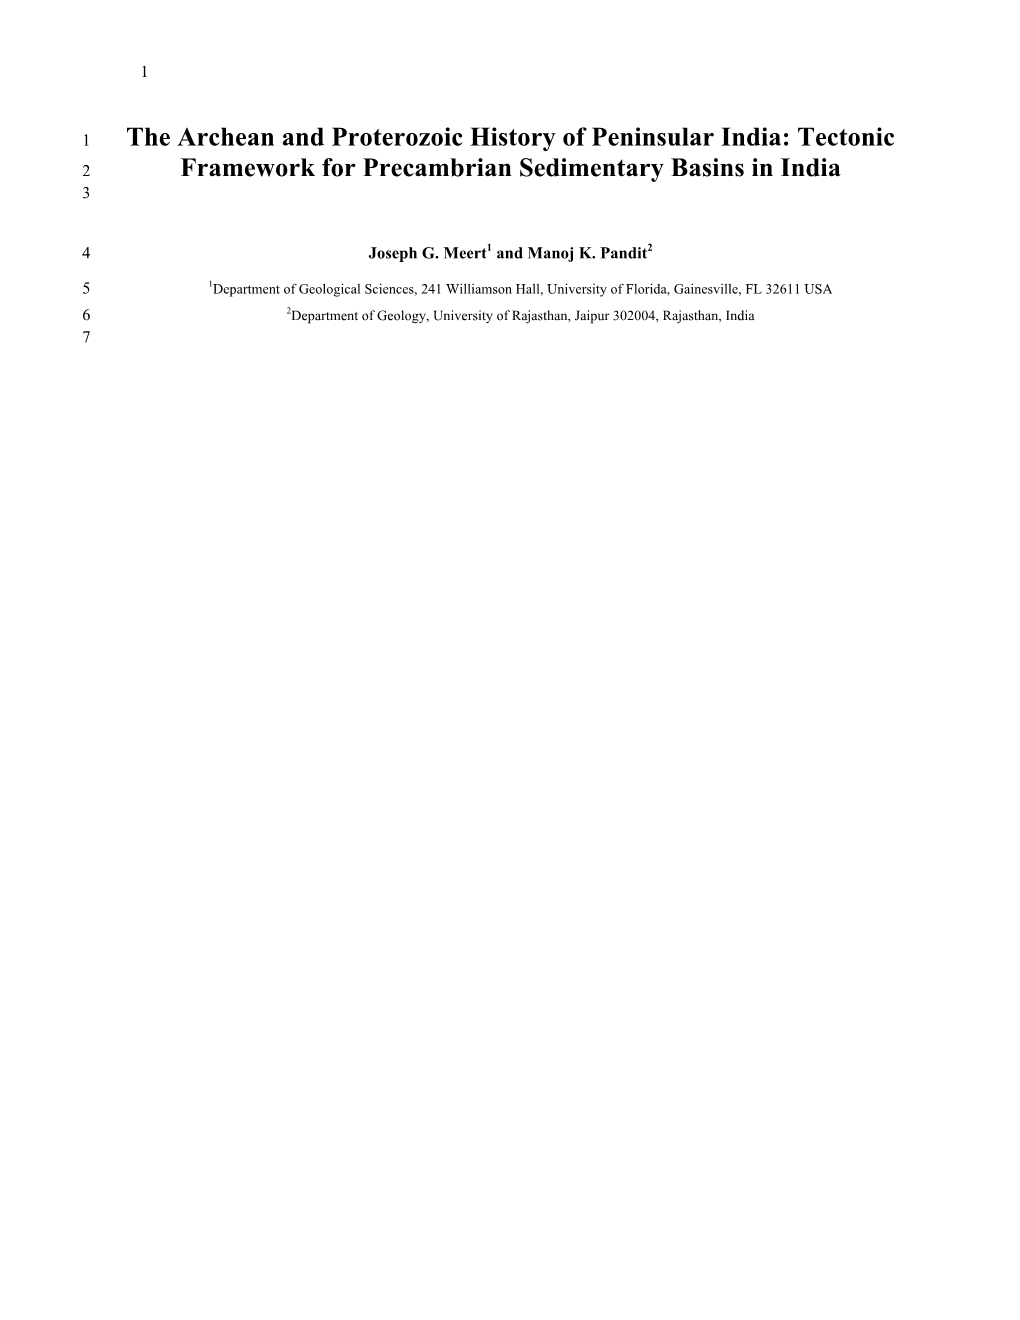 Tectonic Framework for Precambrian Sedimentary Basins in India